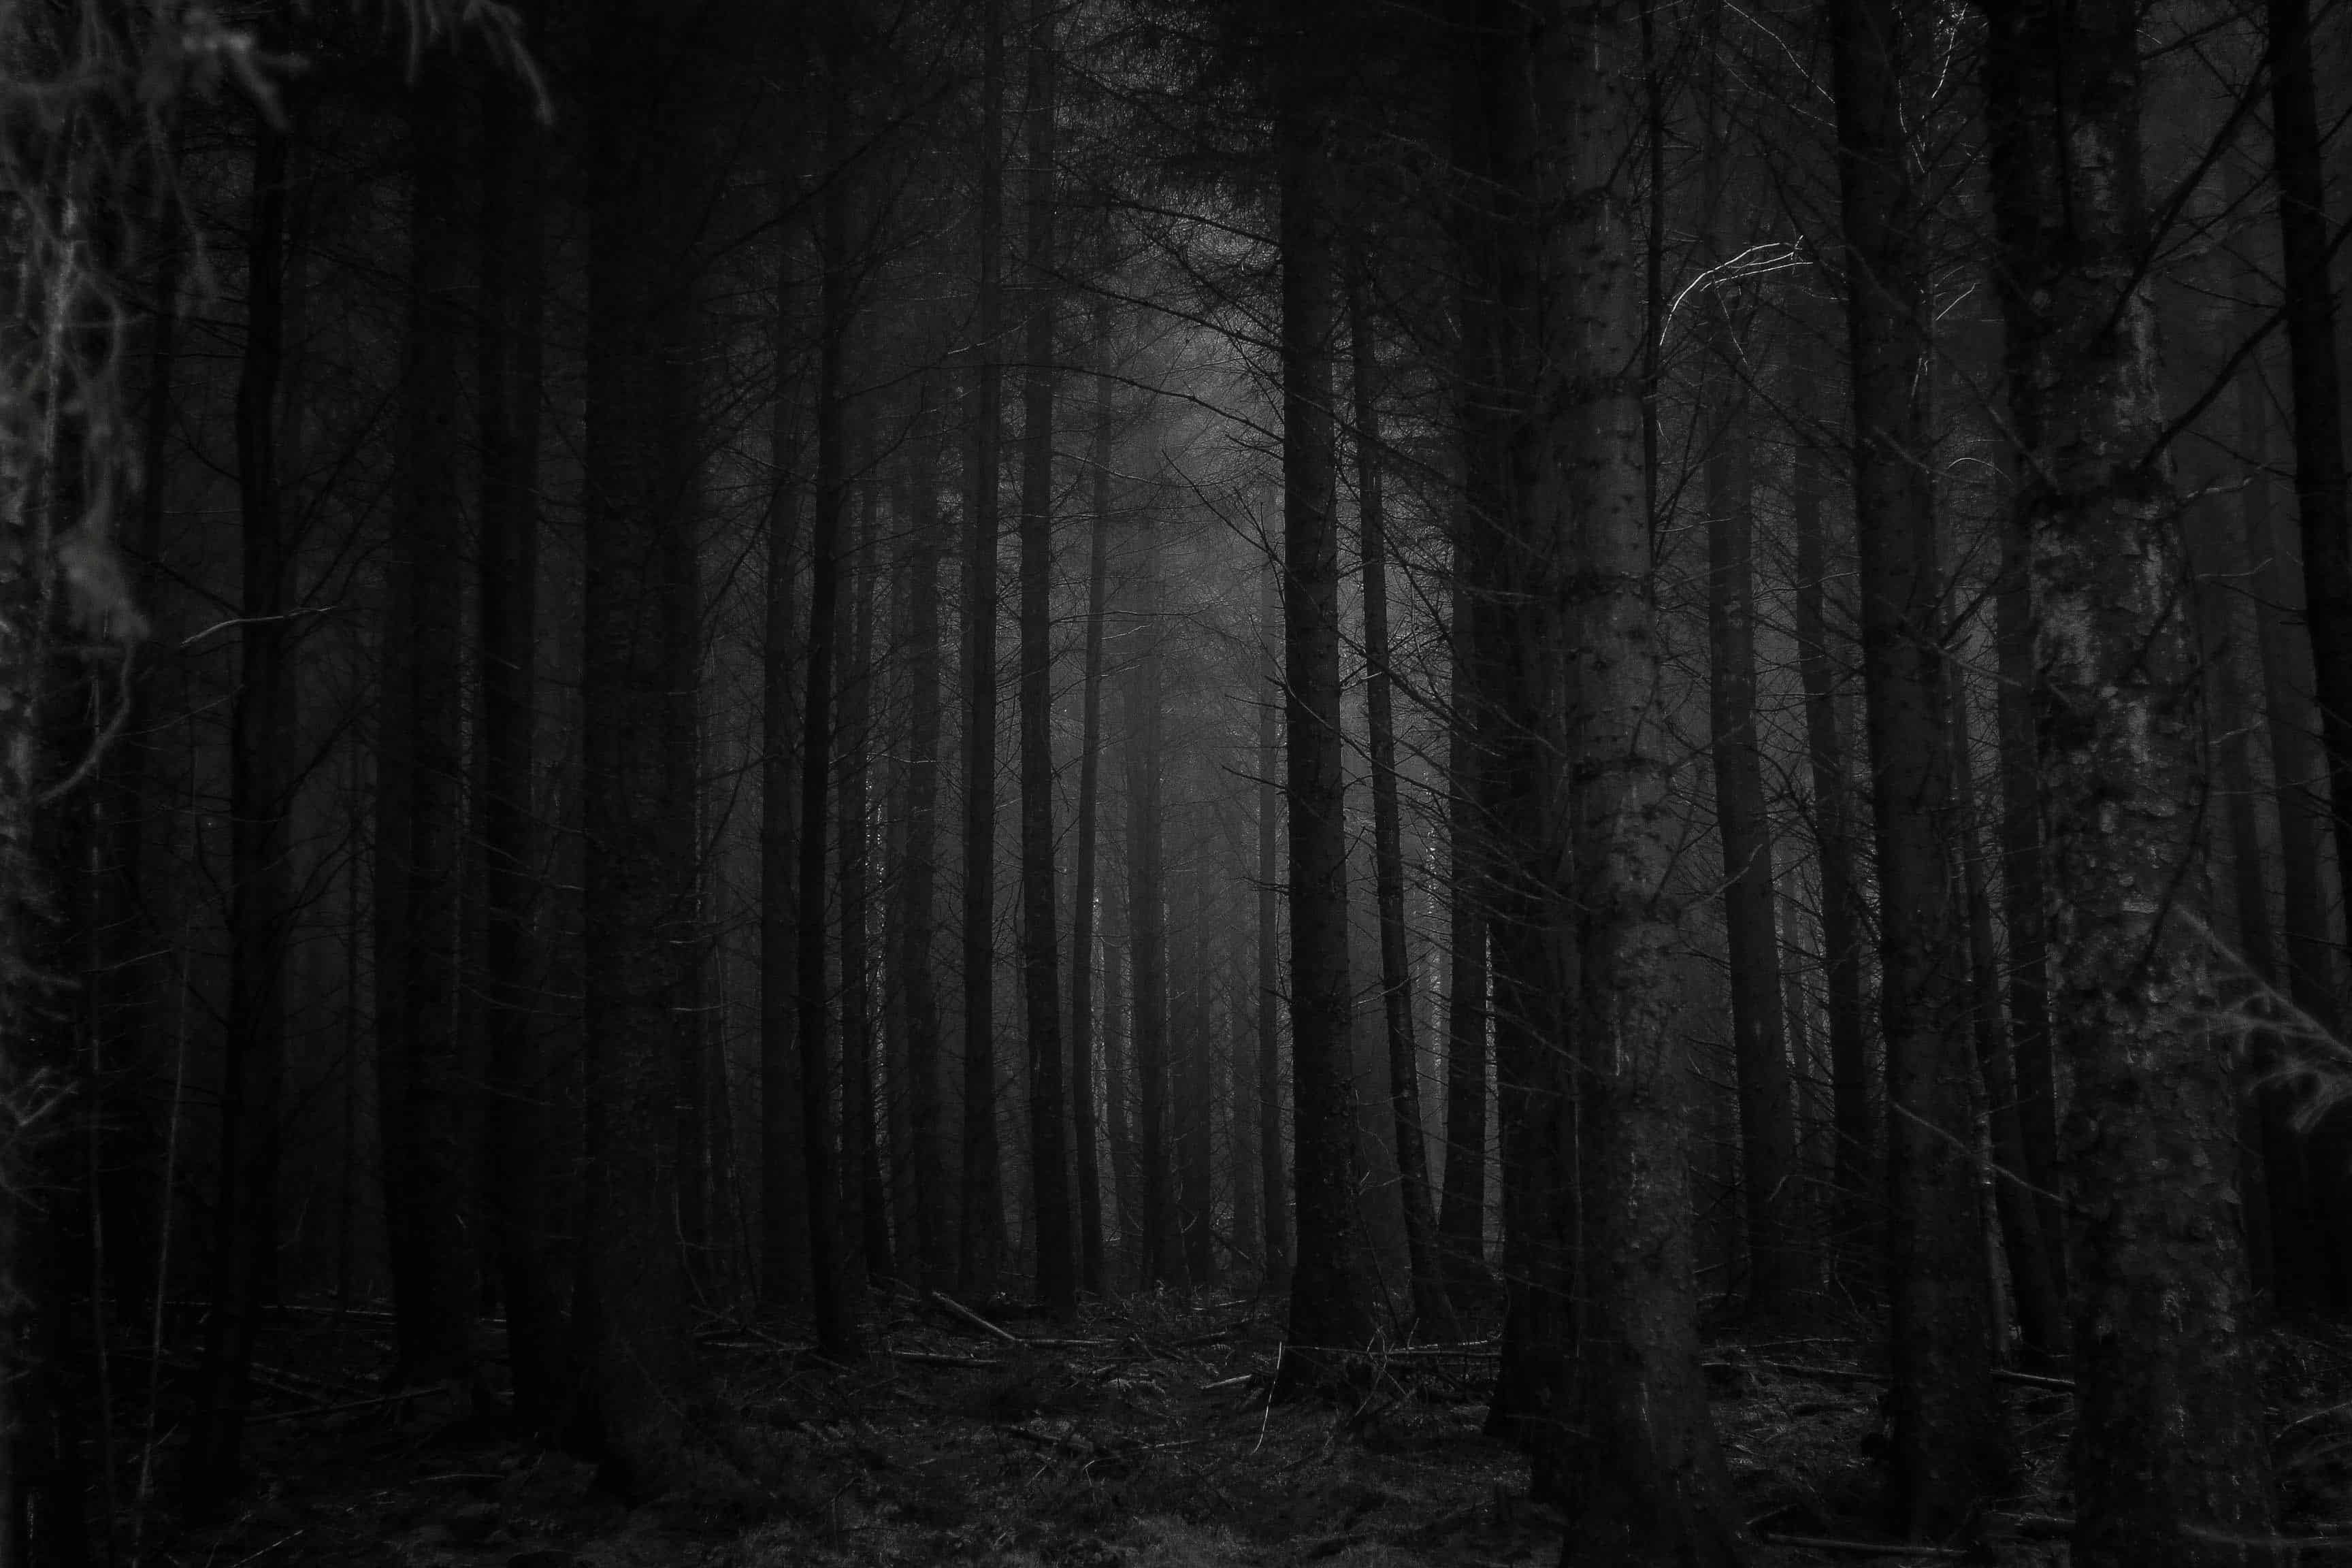 dark spooky forest